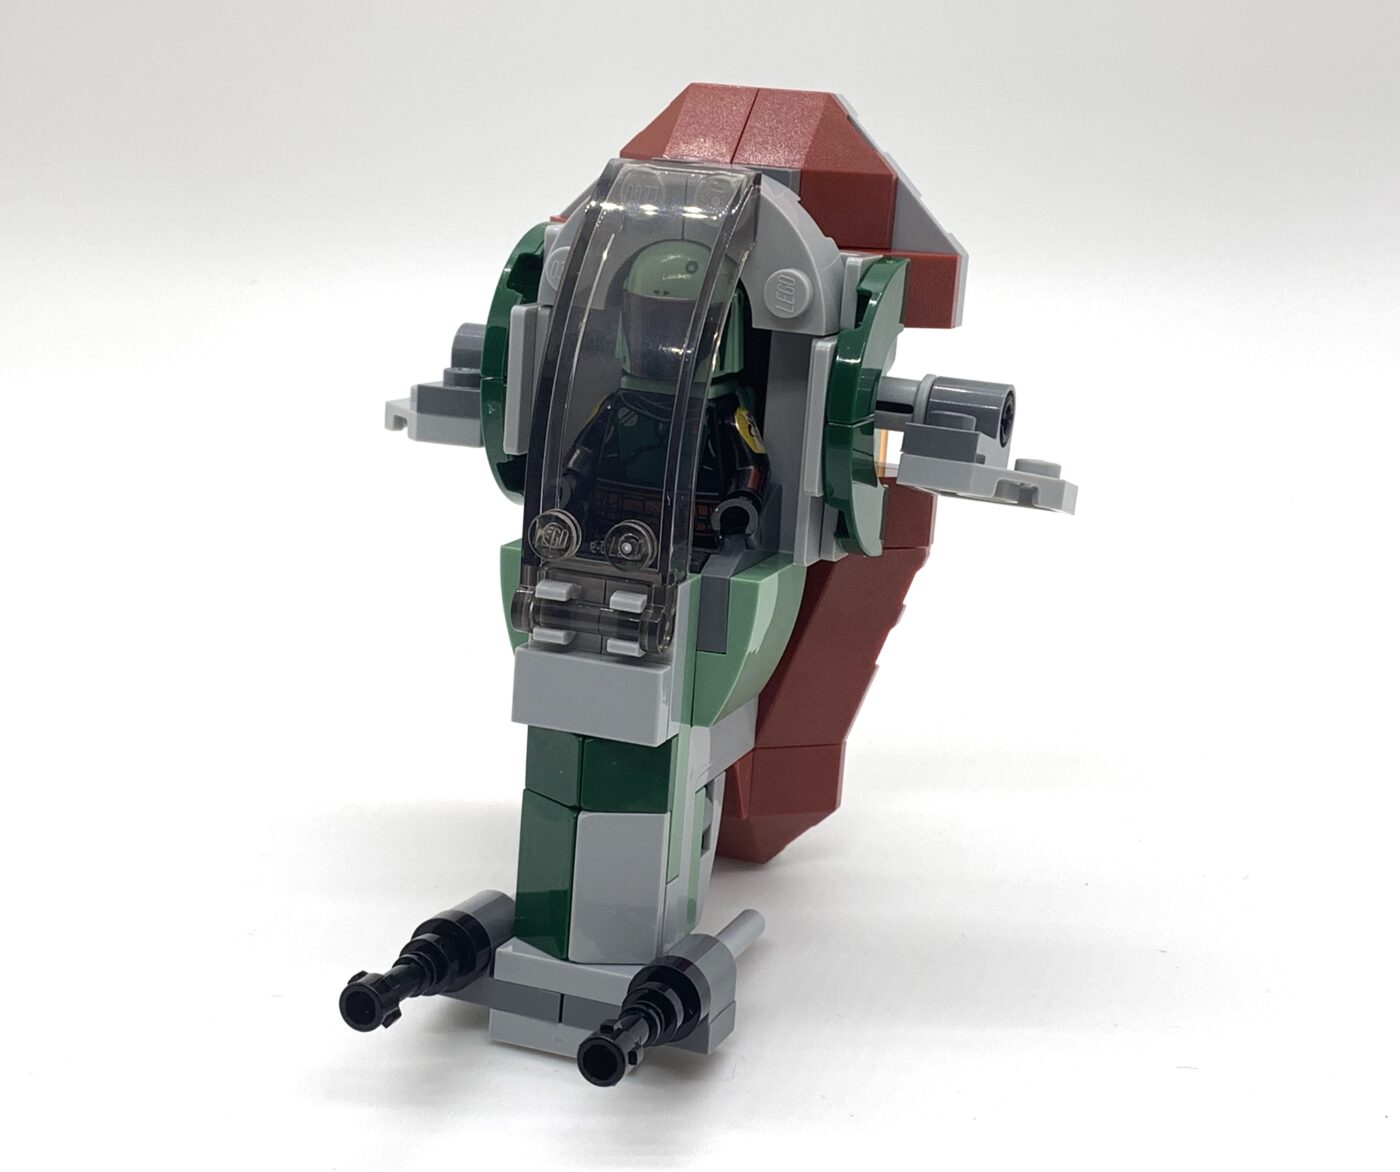 Tilintetgøre Creep 945 Review: LEGO 75344 Boba Fett's Starship Microfighter - Jay's Brick Blog